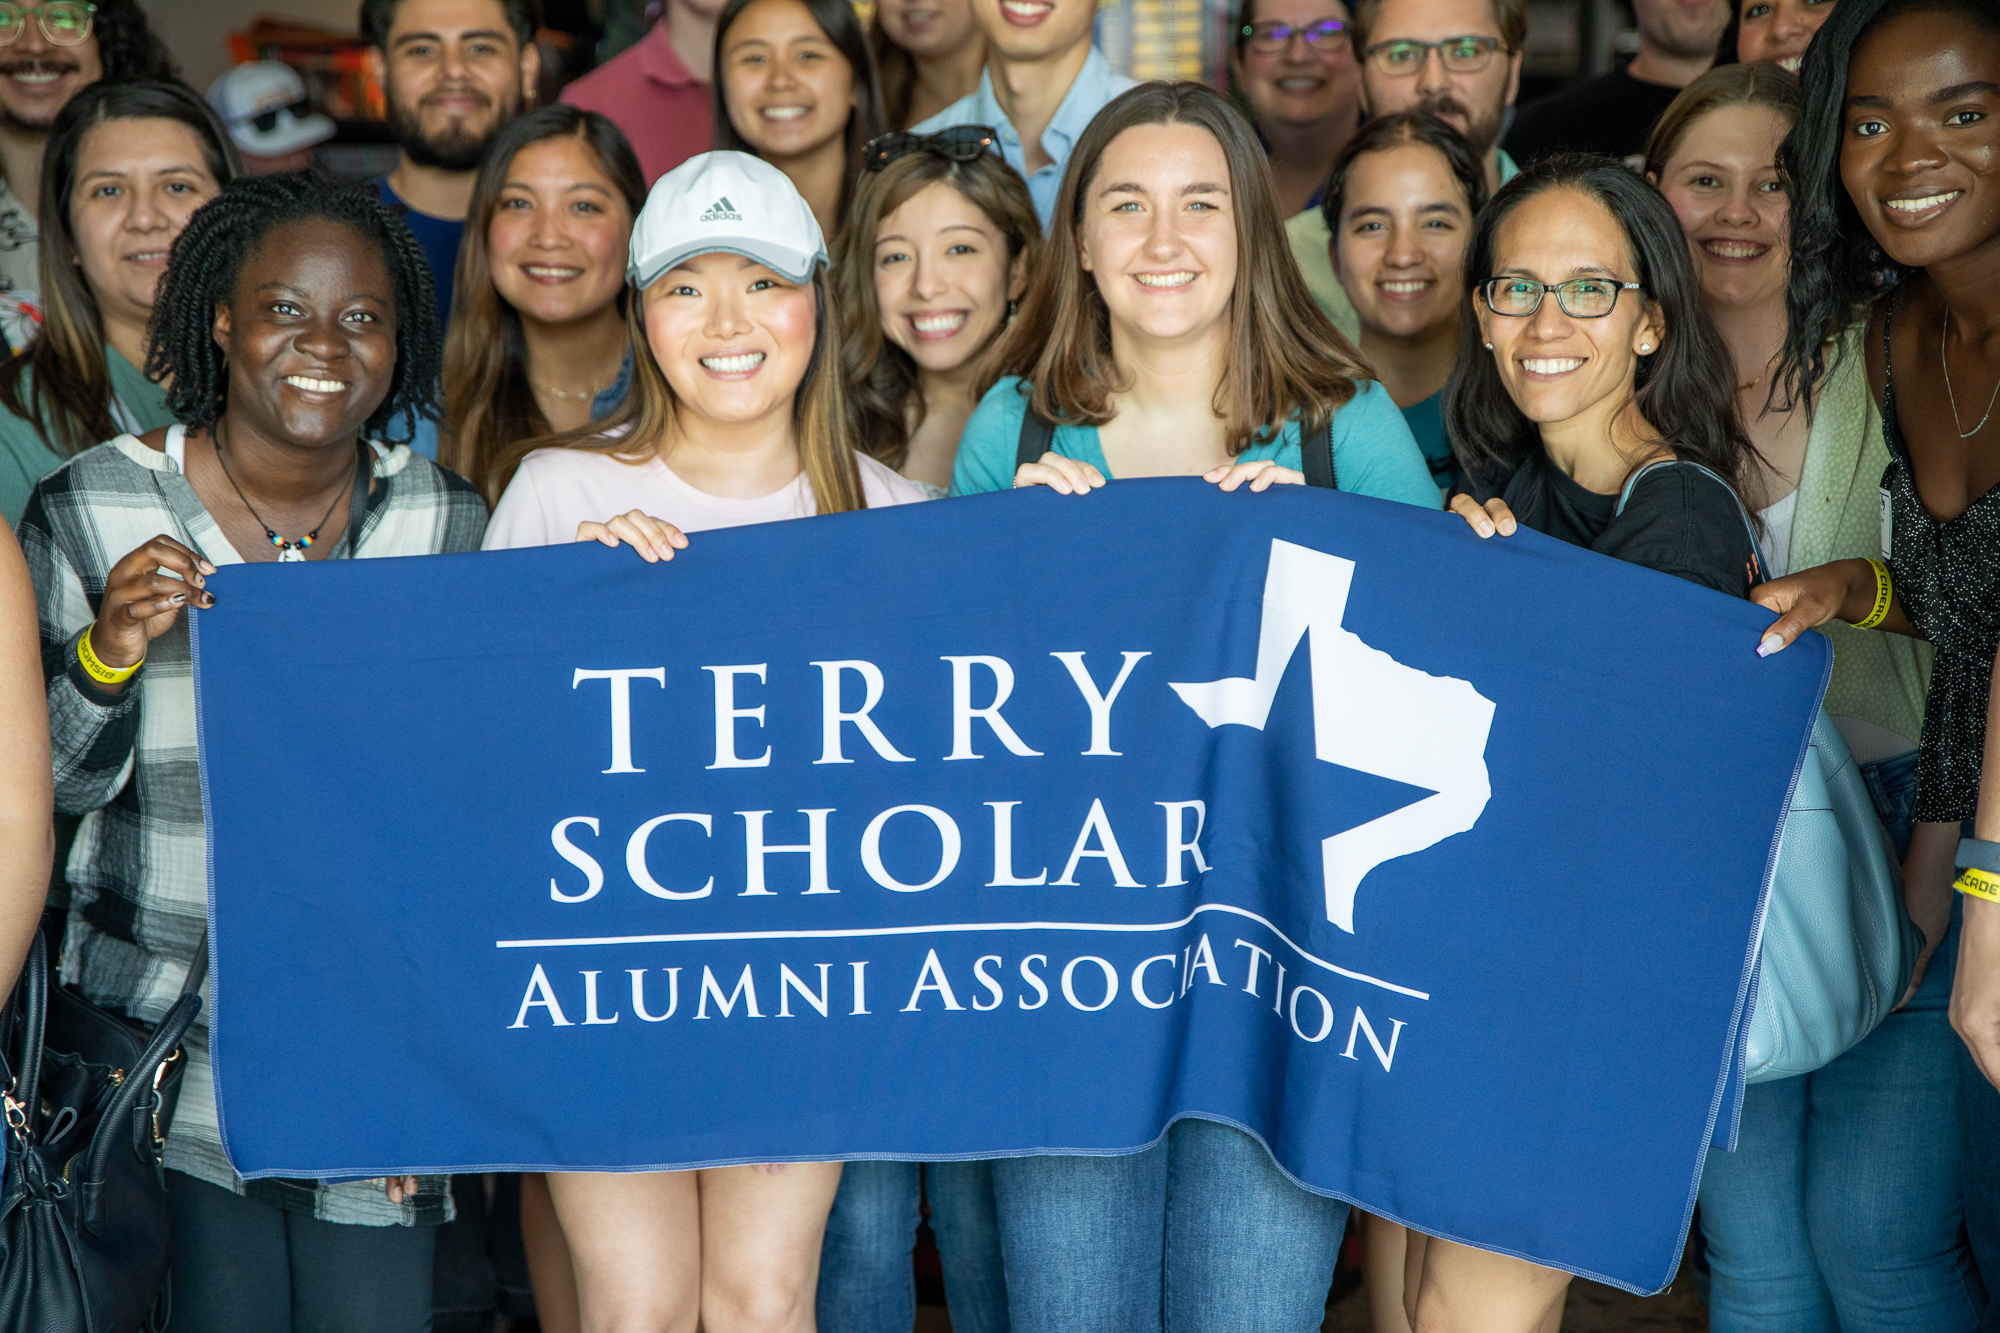 Terry Scholar Alumni Association